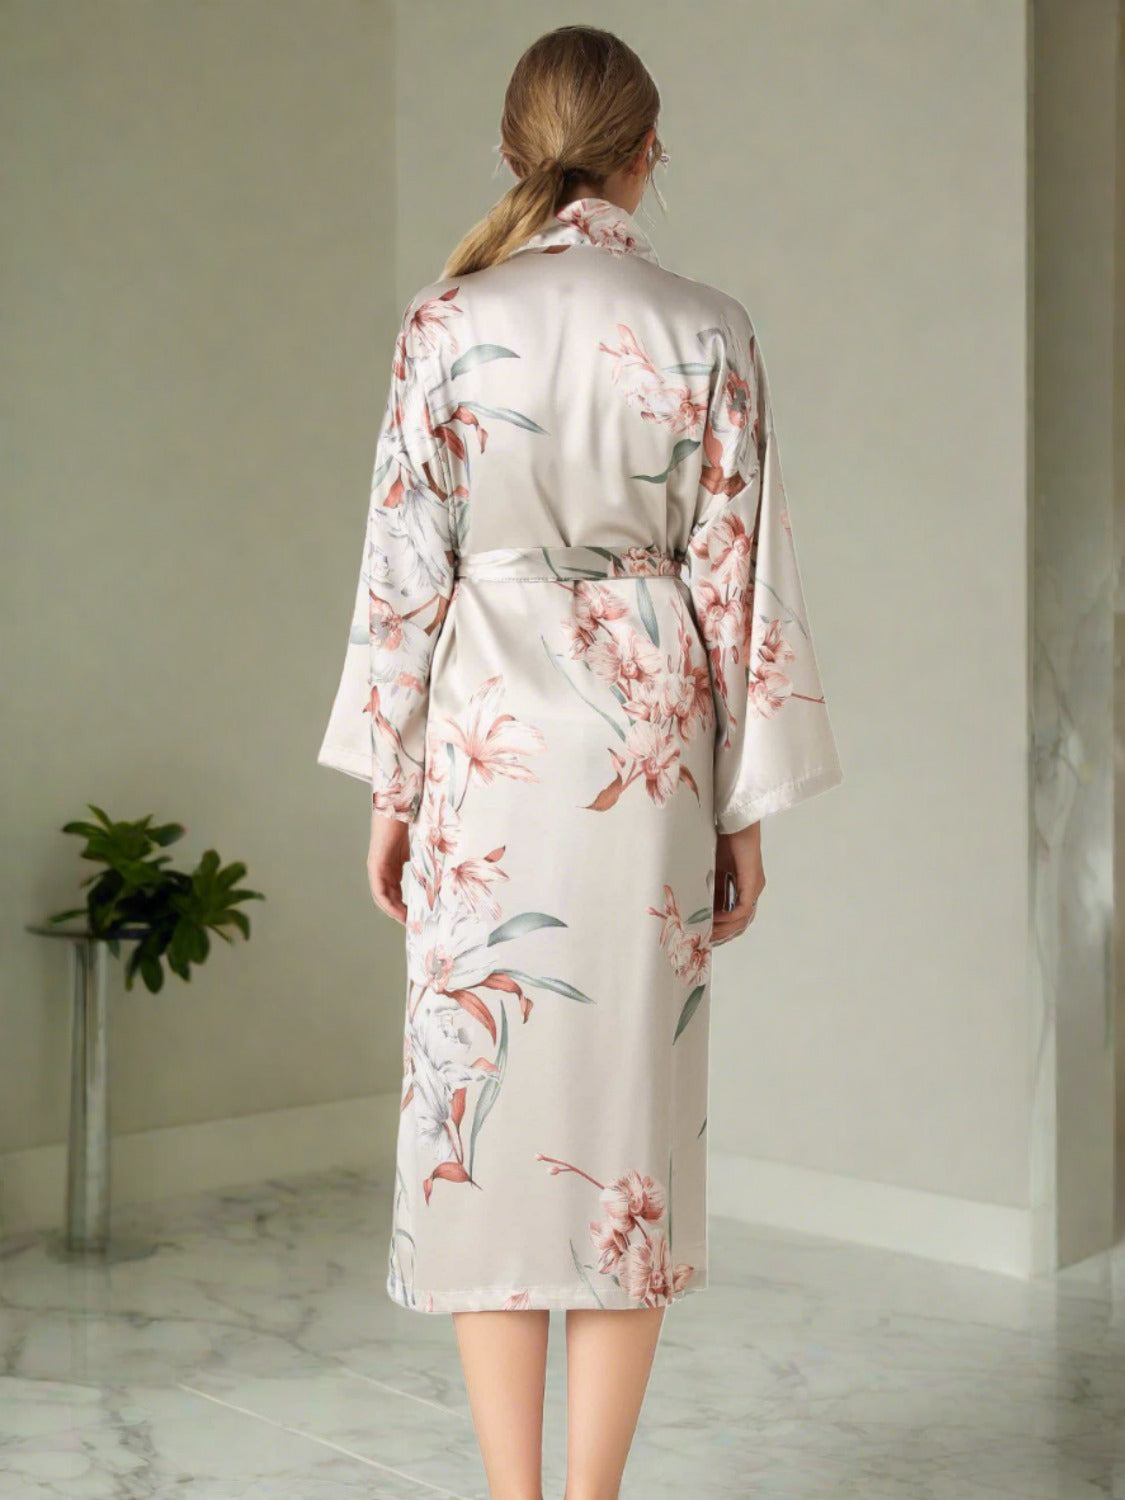 Back of model wearing light gray floral patterned robe